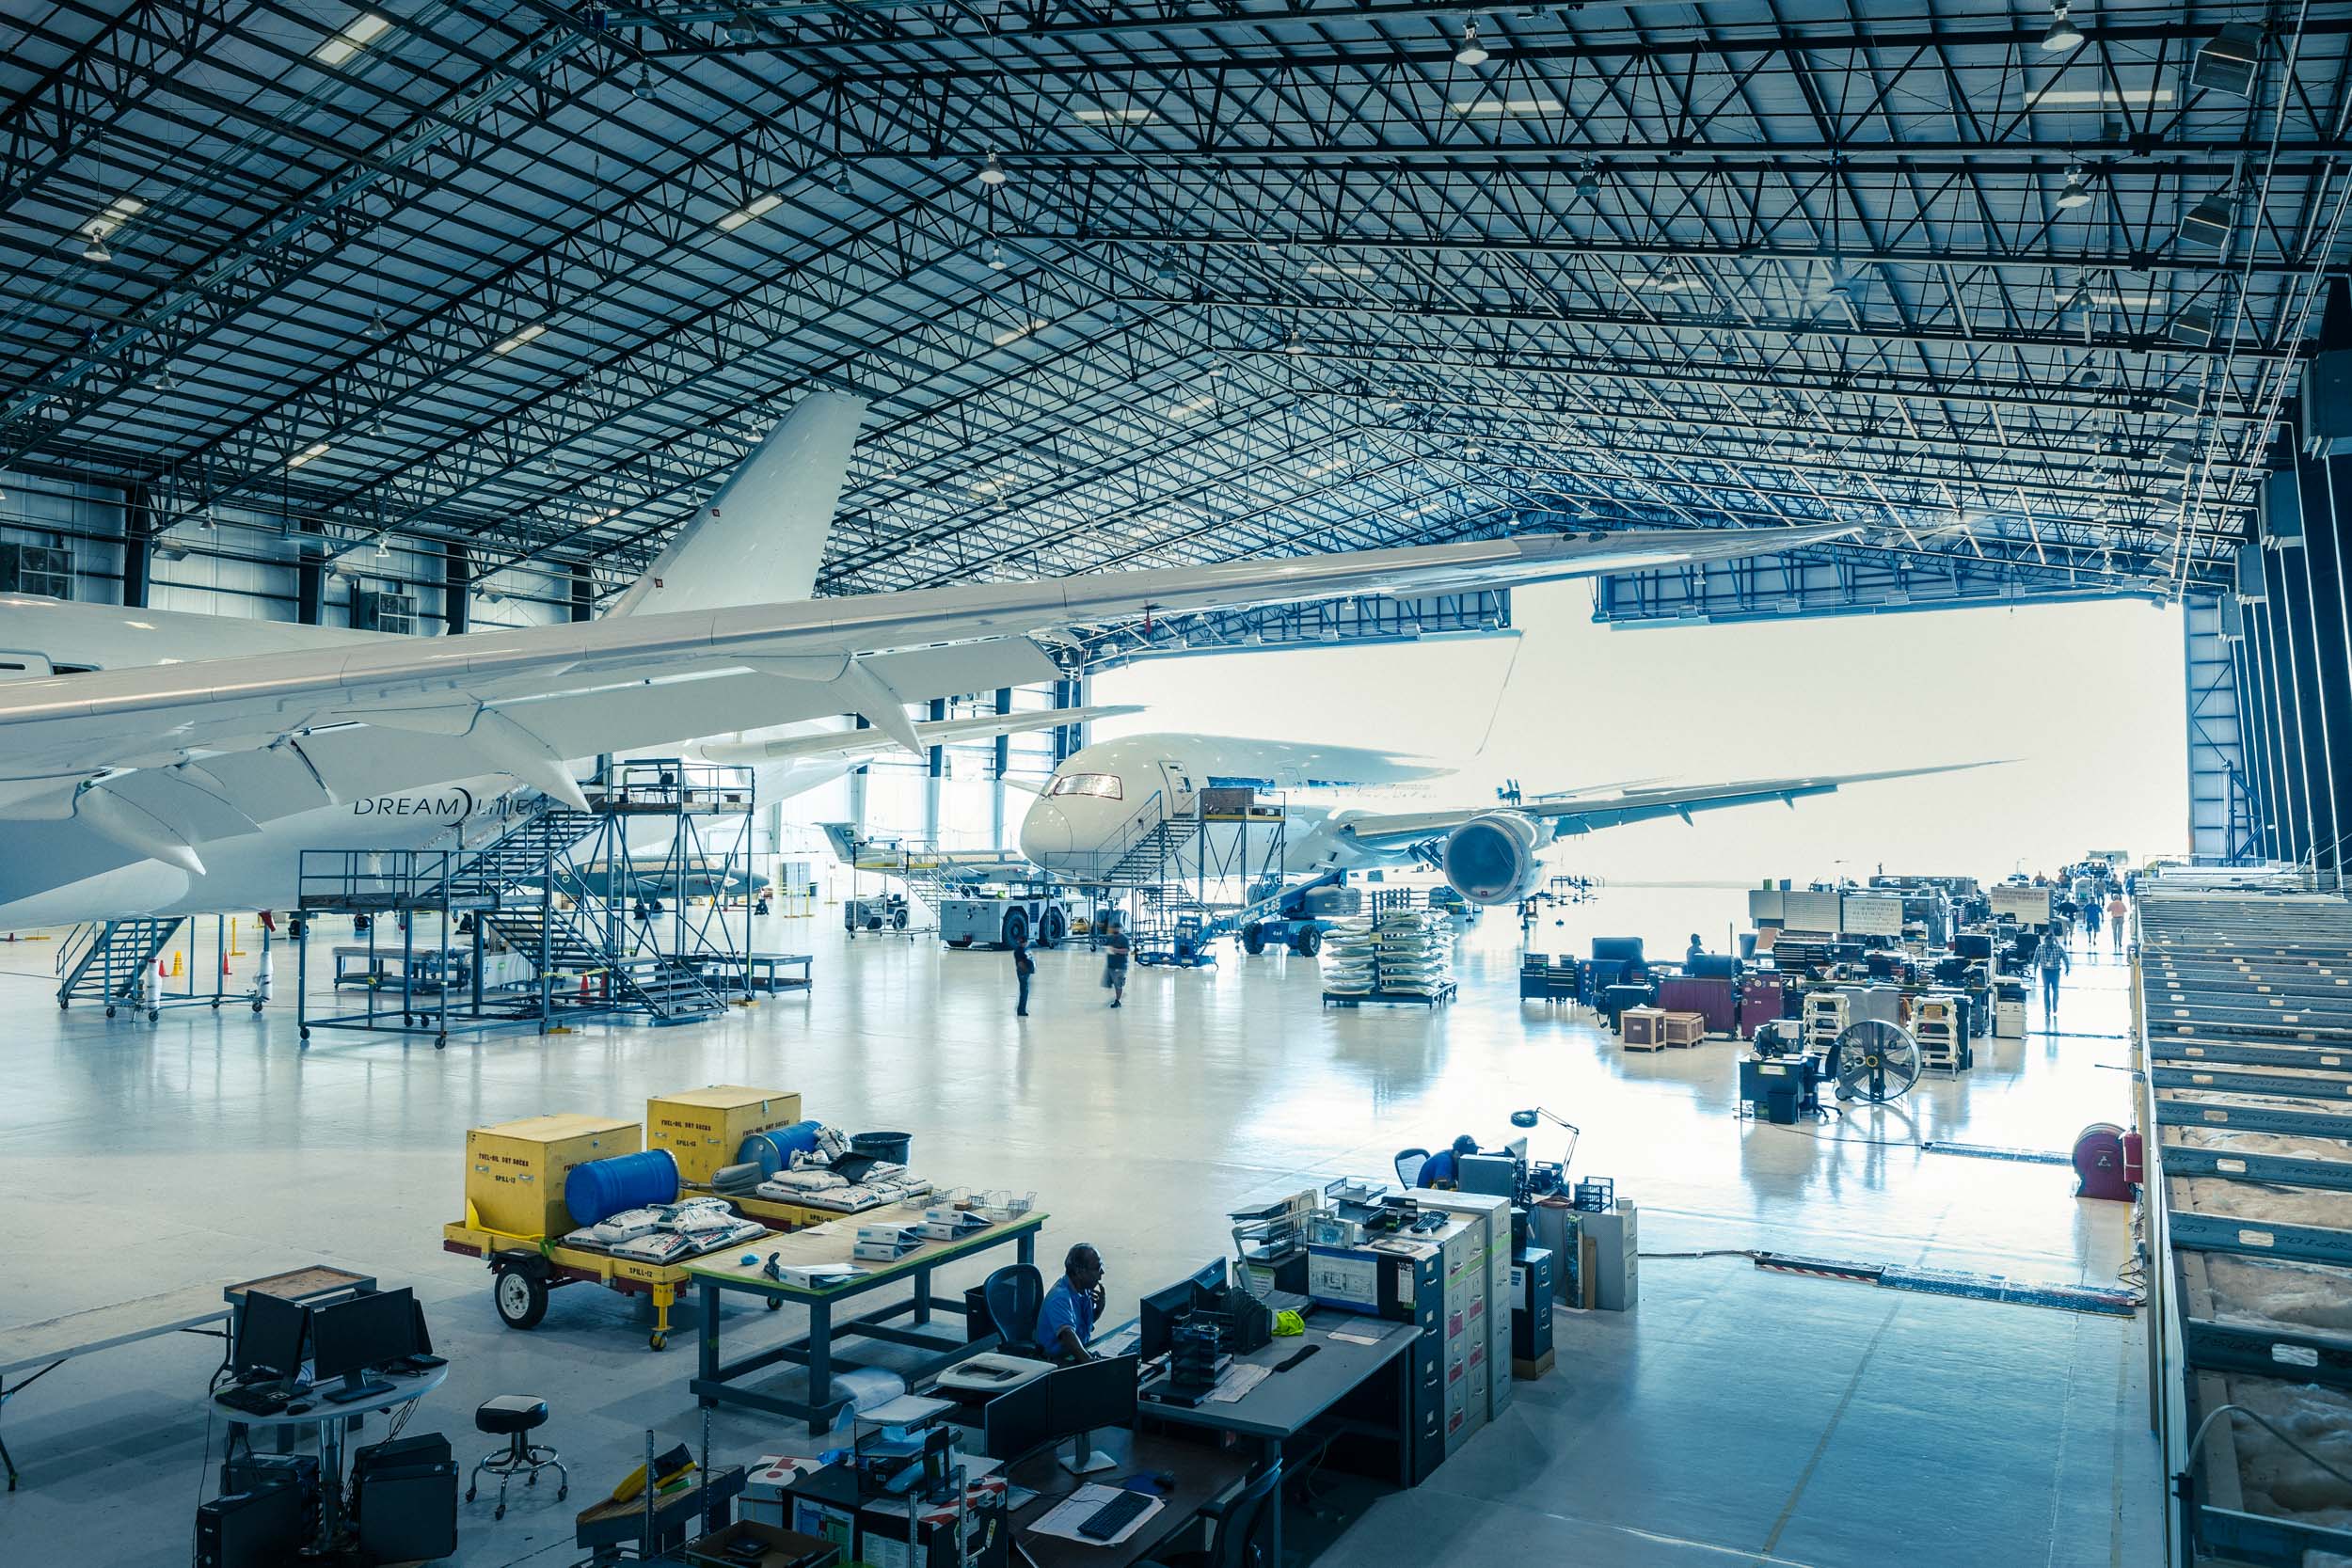 wide view of two airplanes in airplane repair hangar